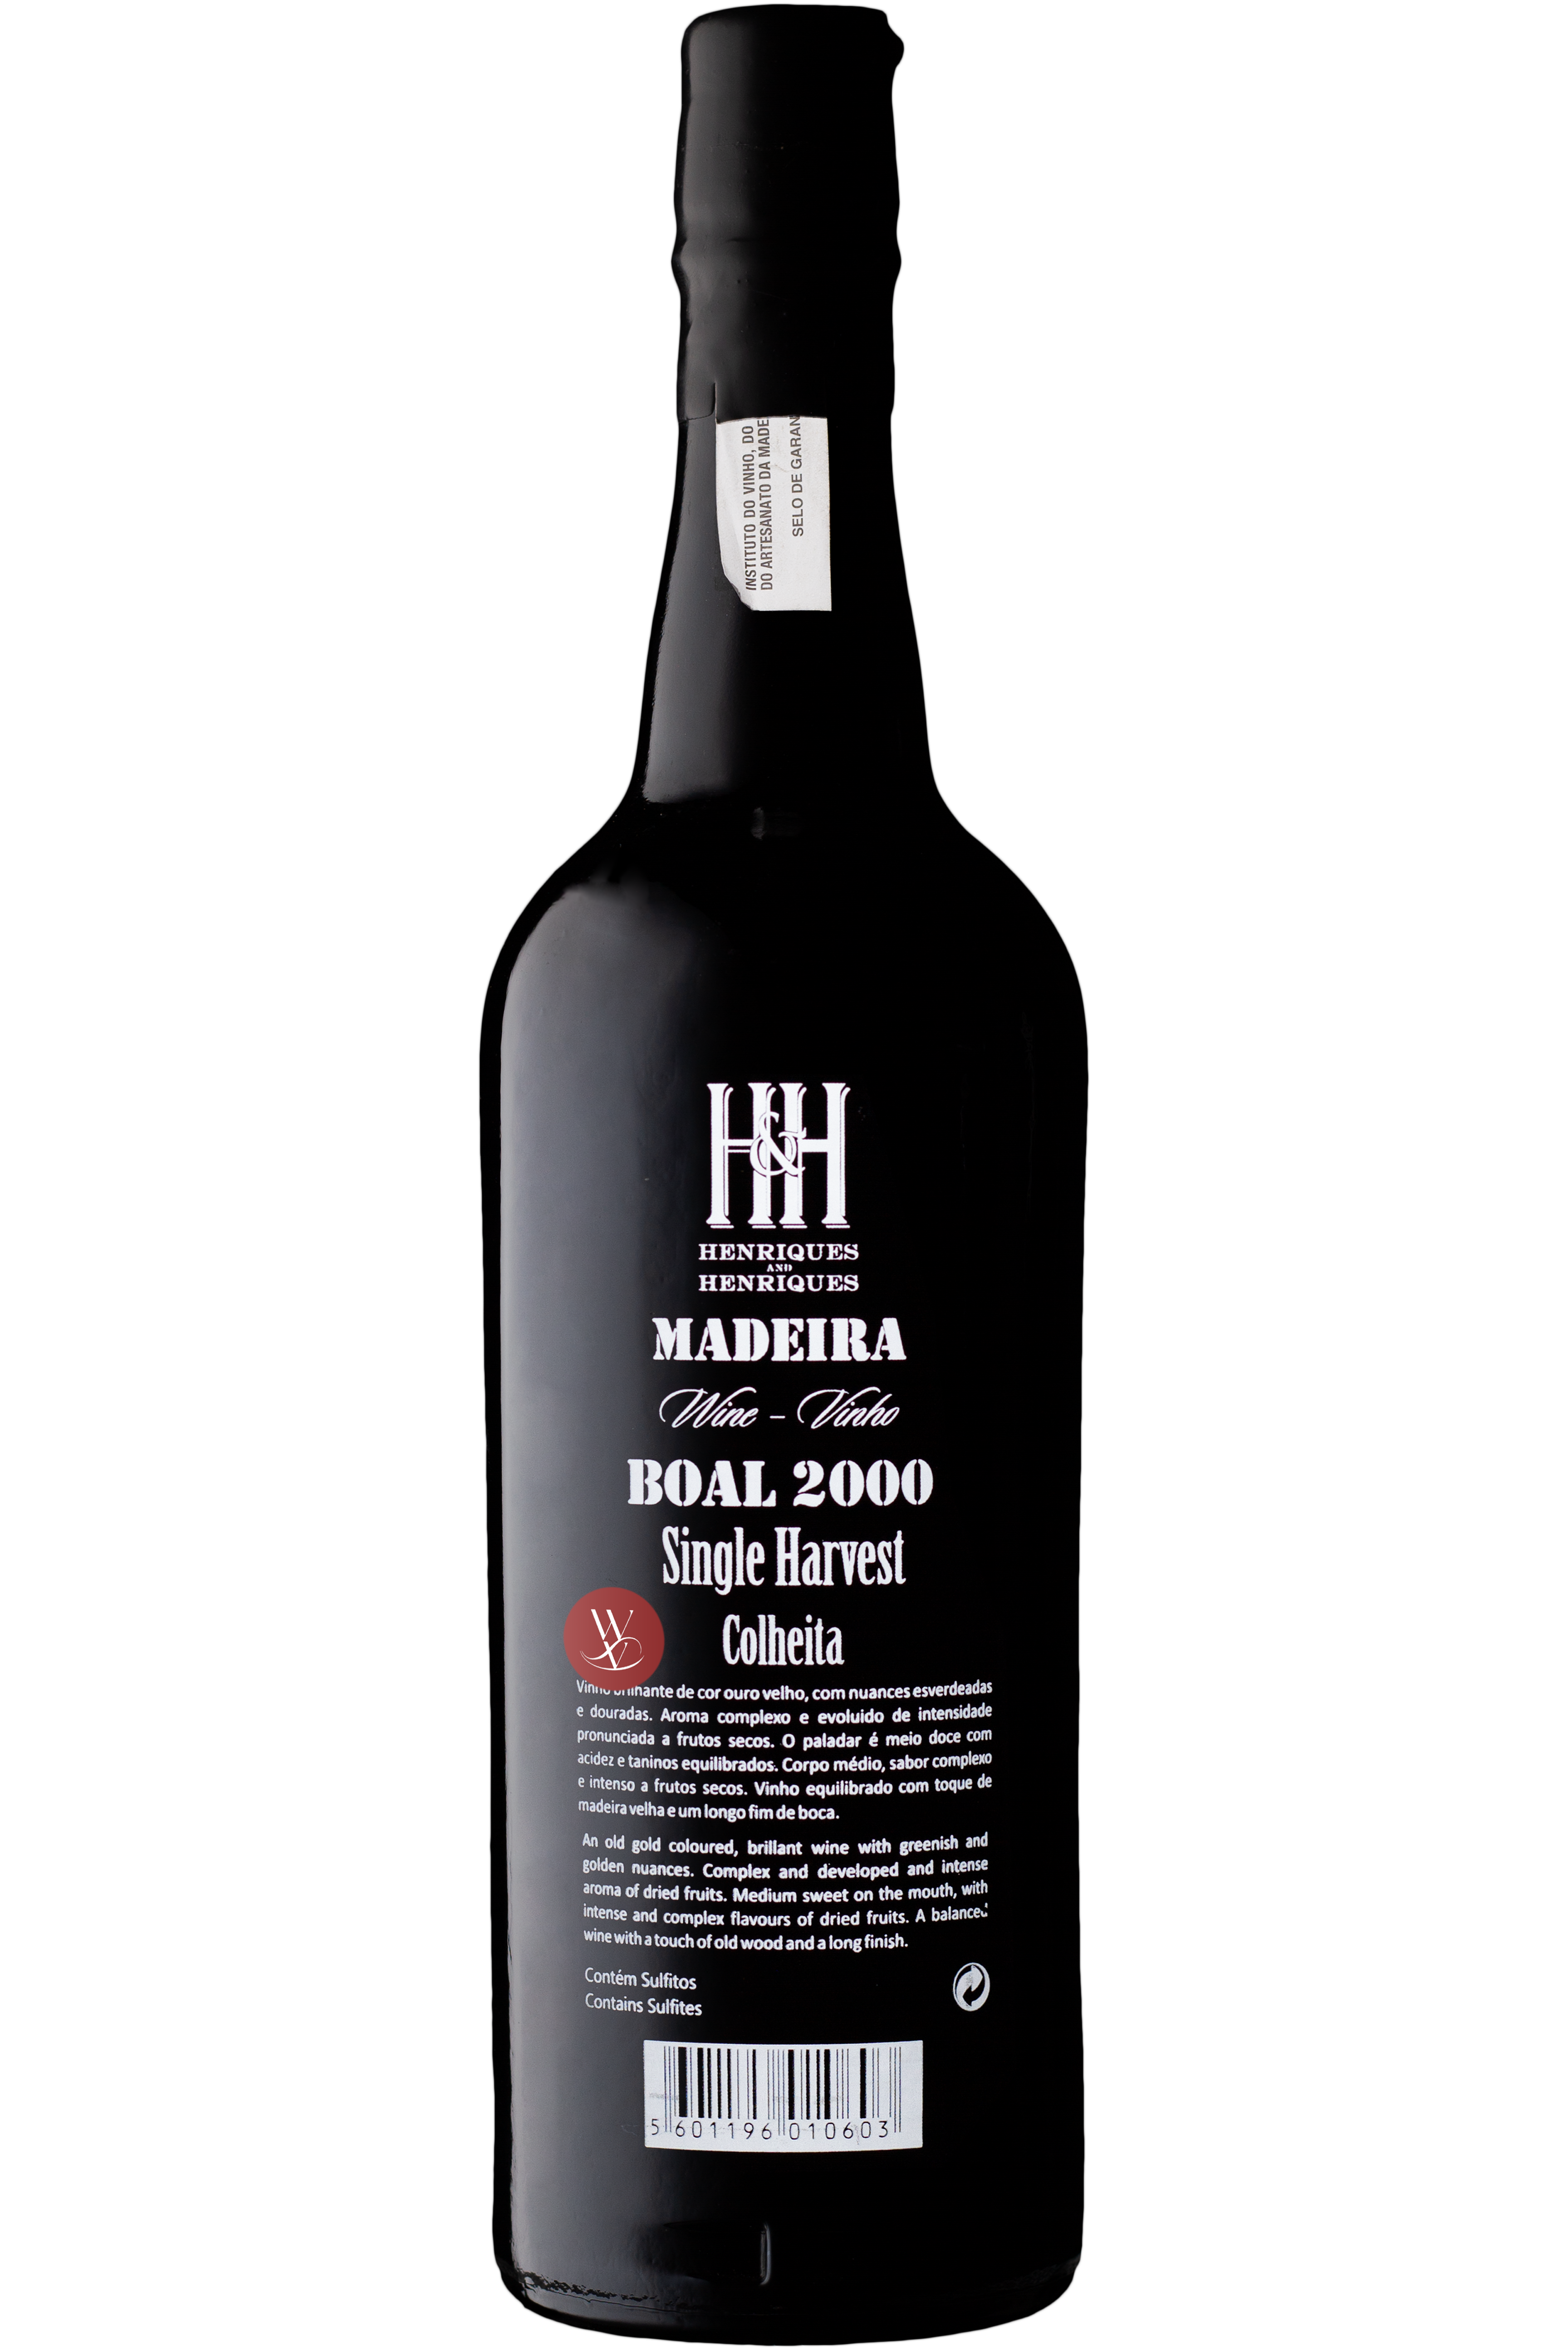 WineVins Henriques & Henriques Madeira Boal Single Harvest 2000